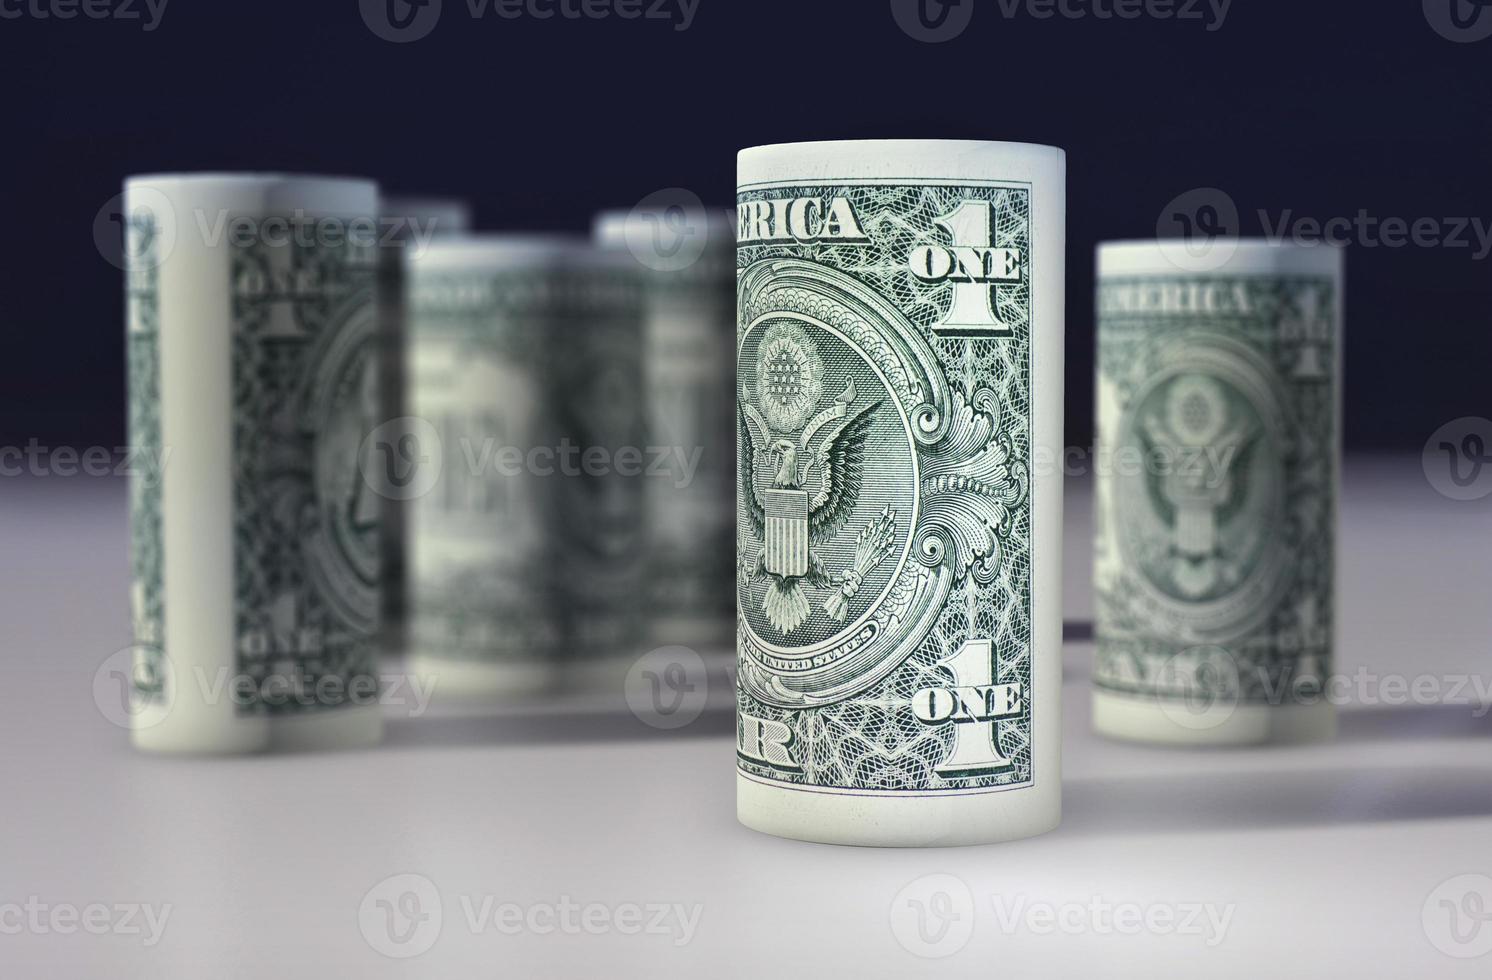 Amerikaanse dollar van 1 dollar opgerold op de zwarte foto